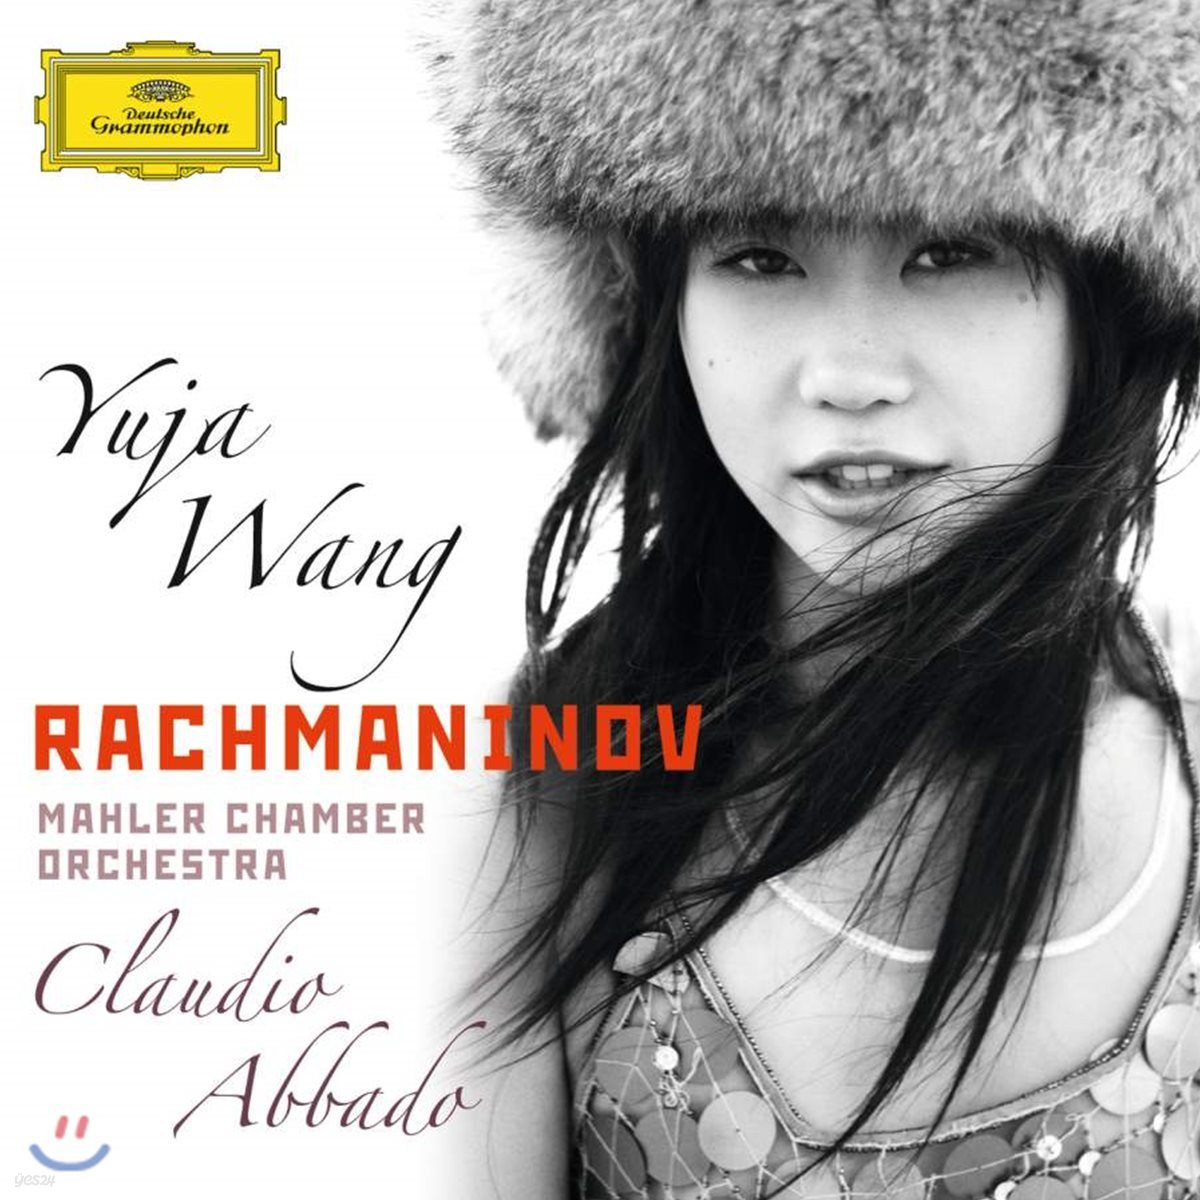 Yuja Wang 라흐마니노프: 피아노 협주곡 2번, 파가니니 광시곡 (Rachmaninov: Piano Concerto Op. 18, Rhapsody on a Theme of Paganini)